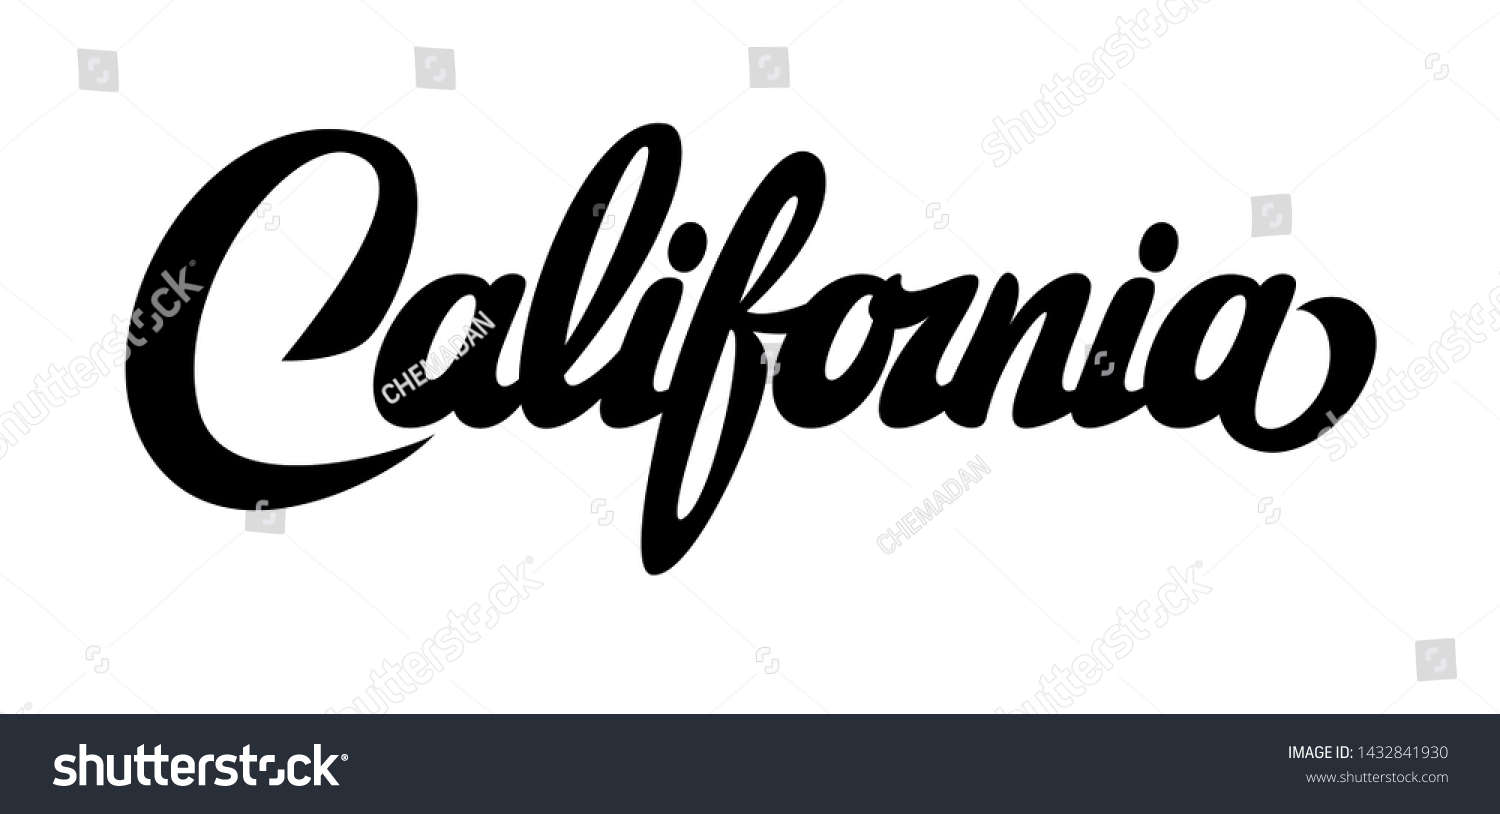 Vector Illustration Calligraphic Lettering California On Stock Vector ...